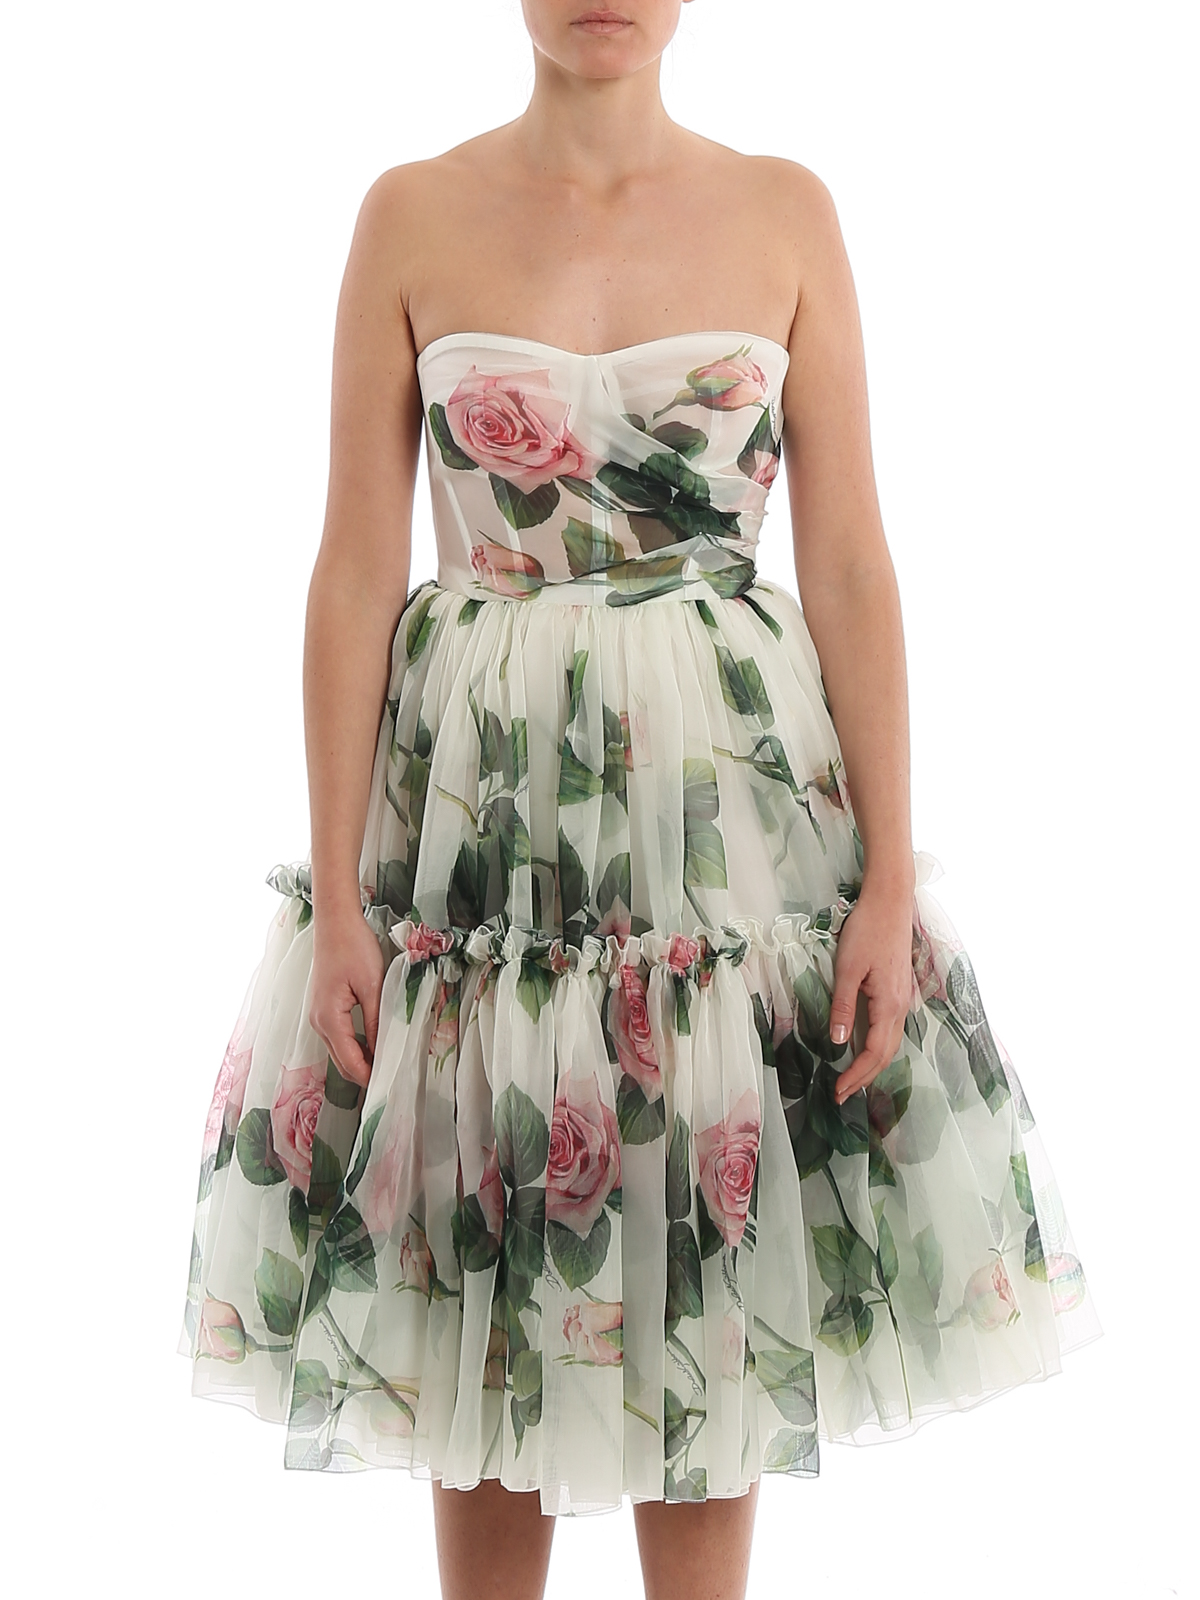 dolce and gabbana rose print dress